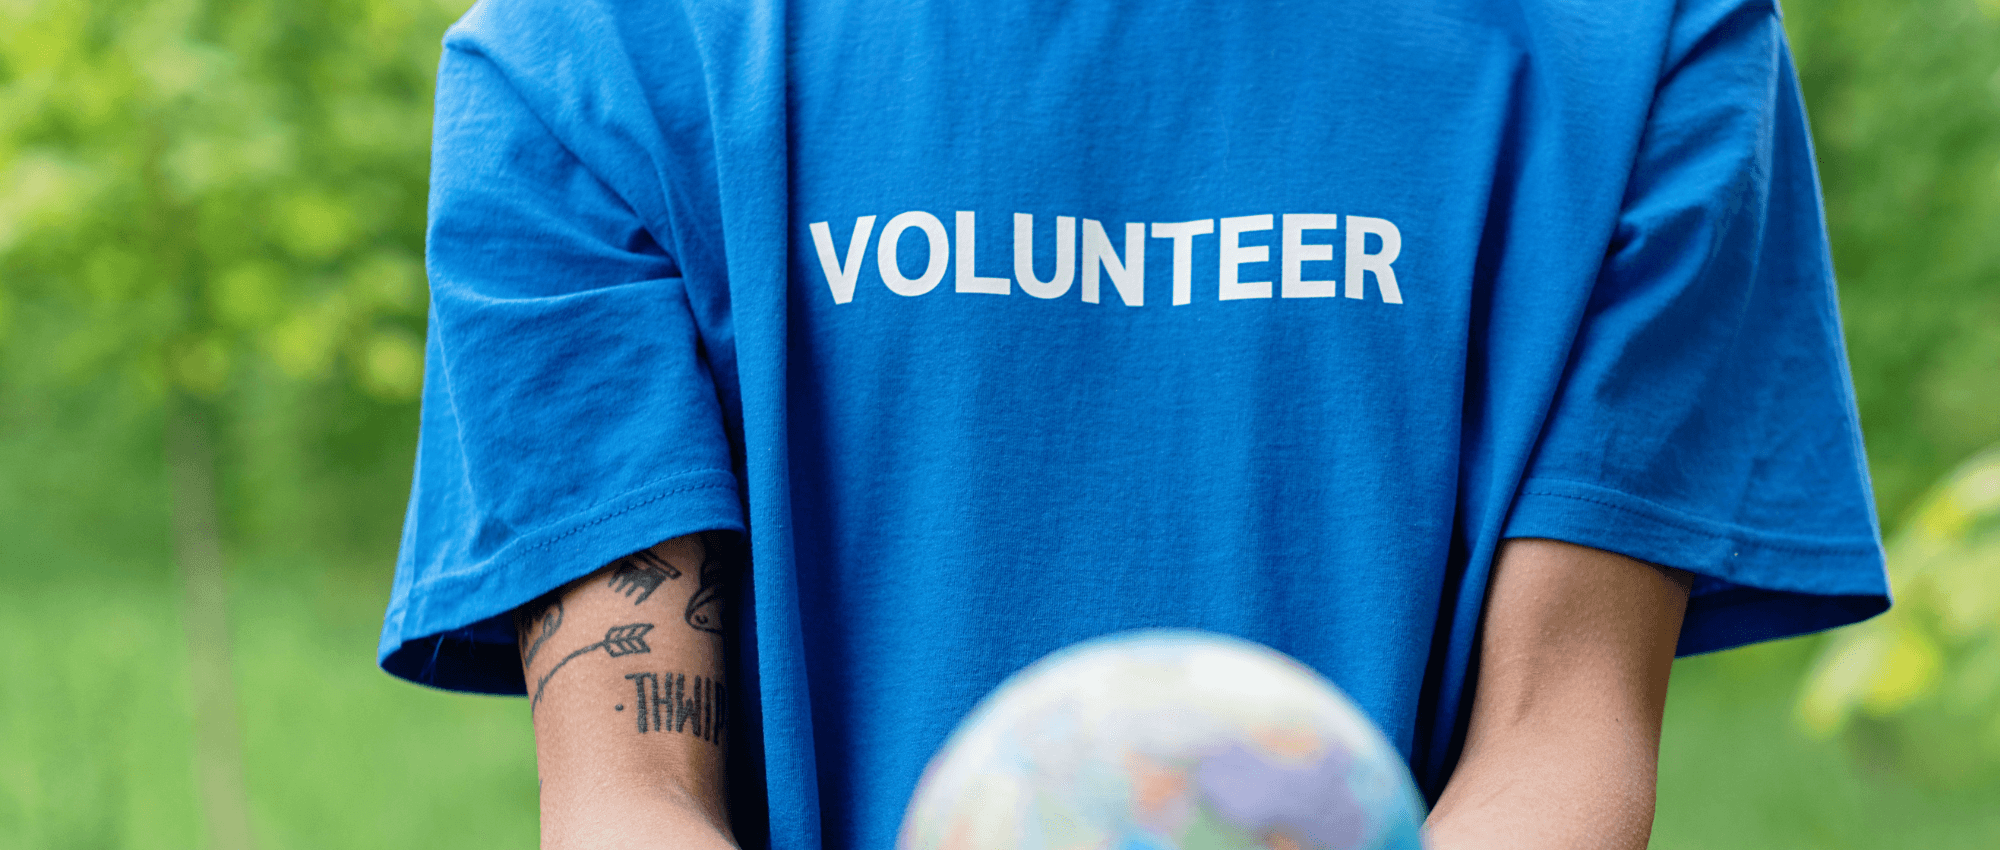 A person wearing a blue volunteer shirt